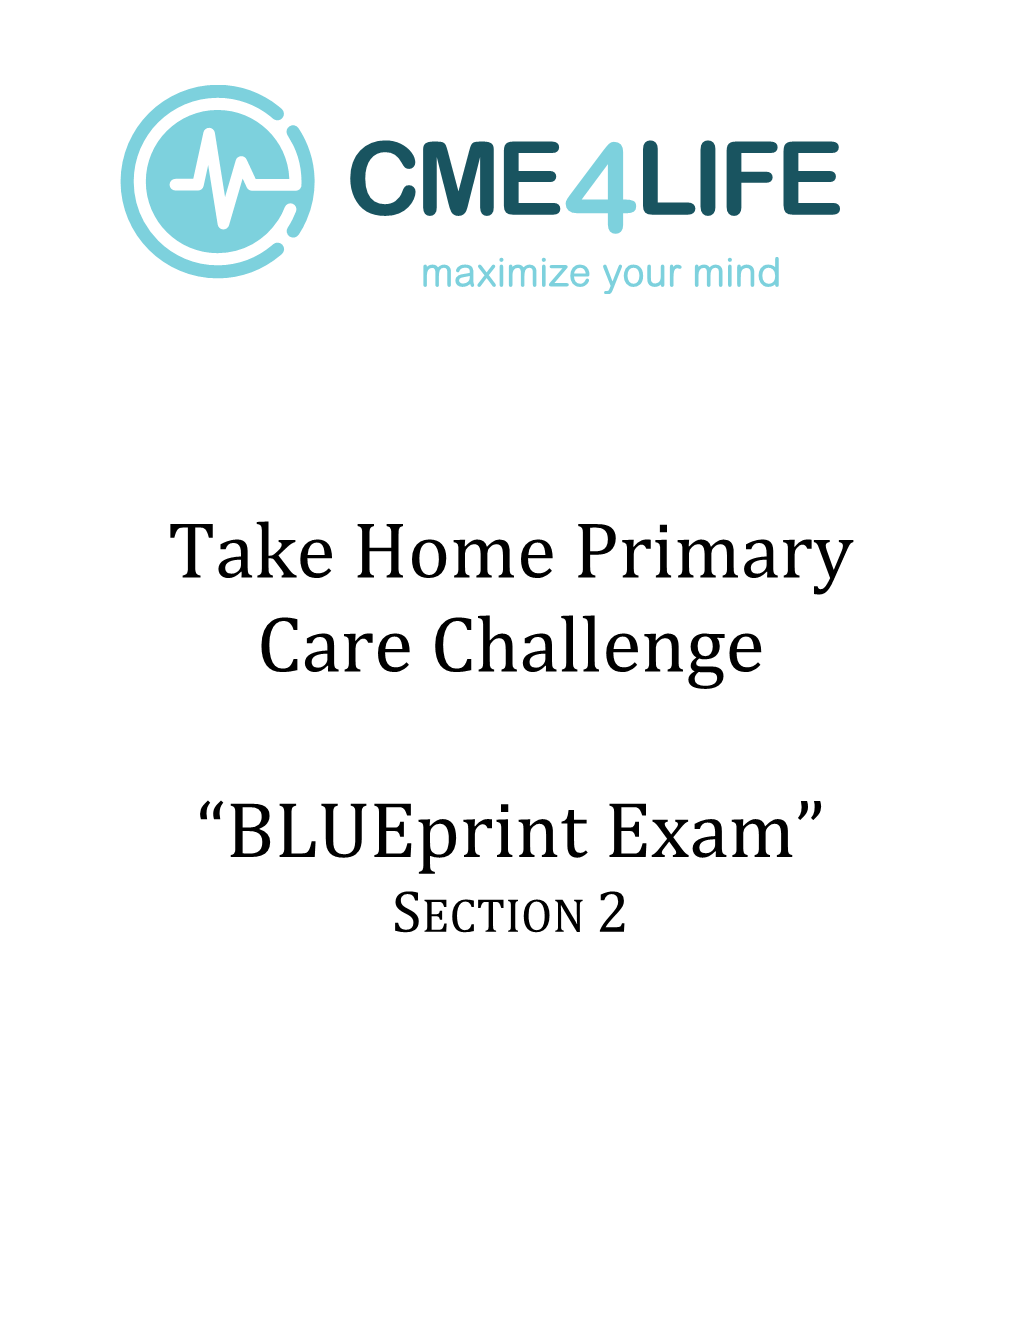 Take Home Primary Care Challenge “Blueprint Exam”